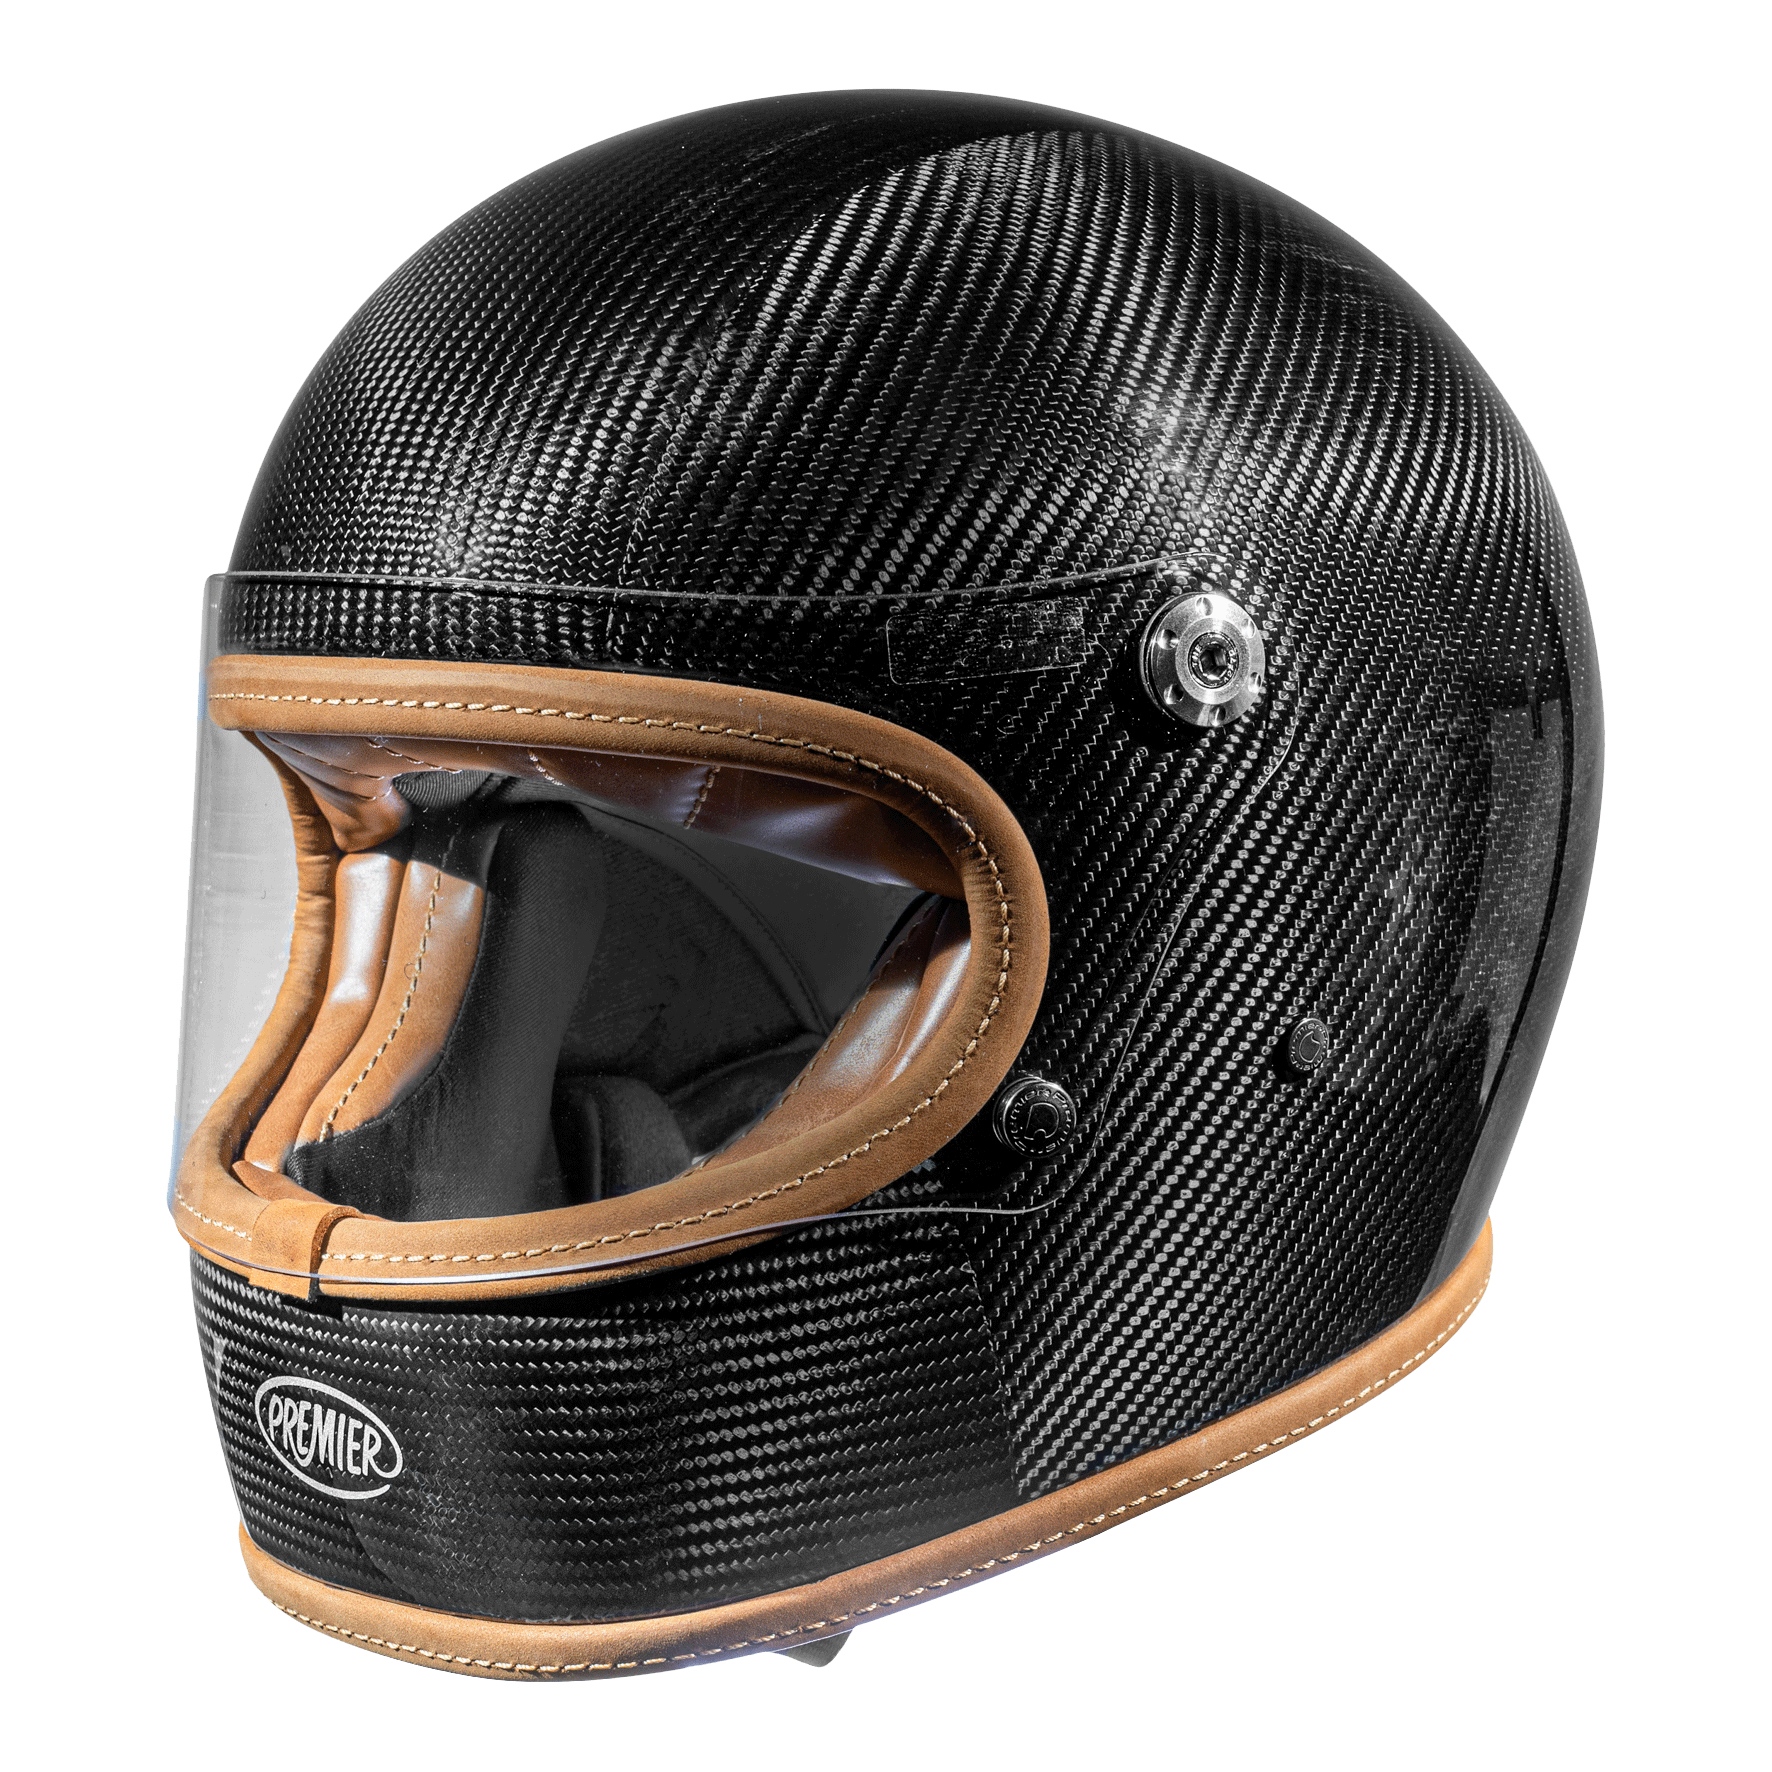 Image of Premier Trophy Platinum Ed Carbon Full Face Helmet Size S EN